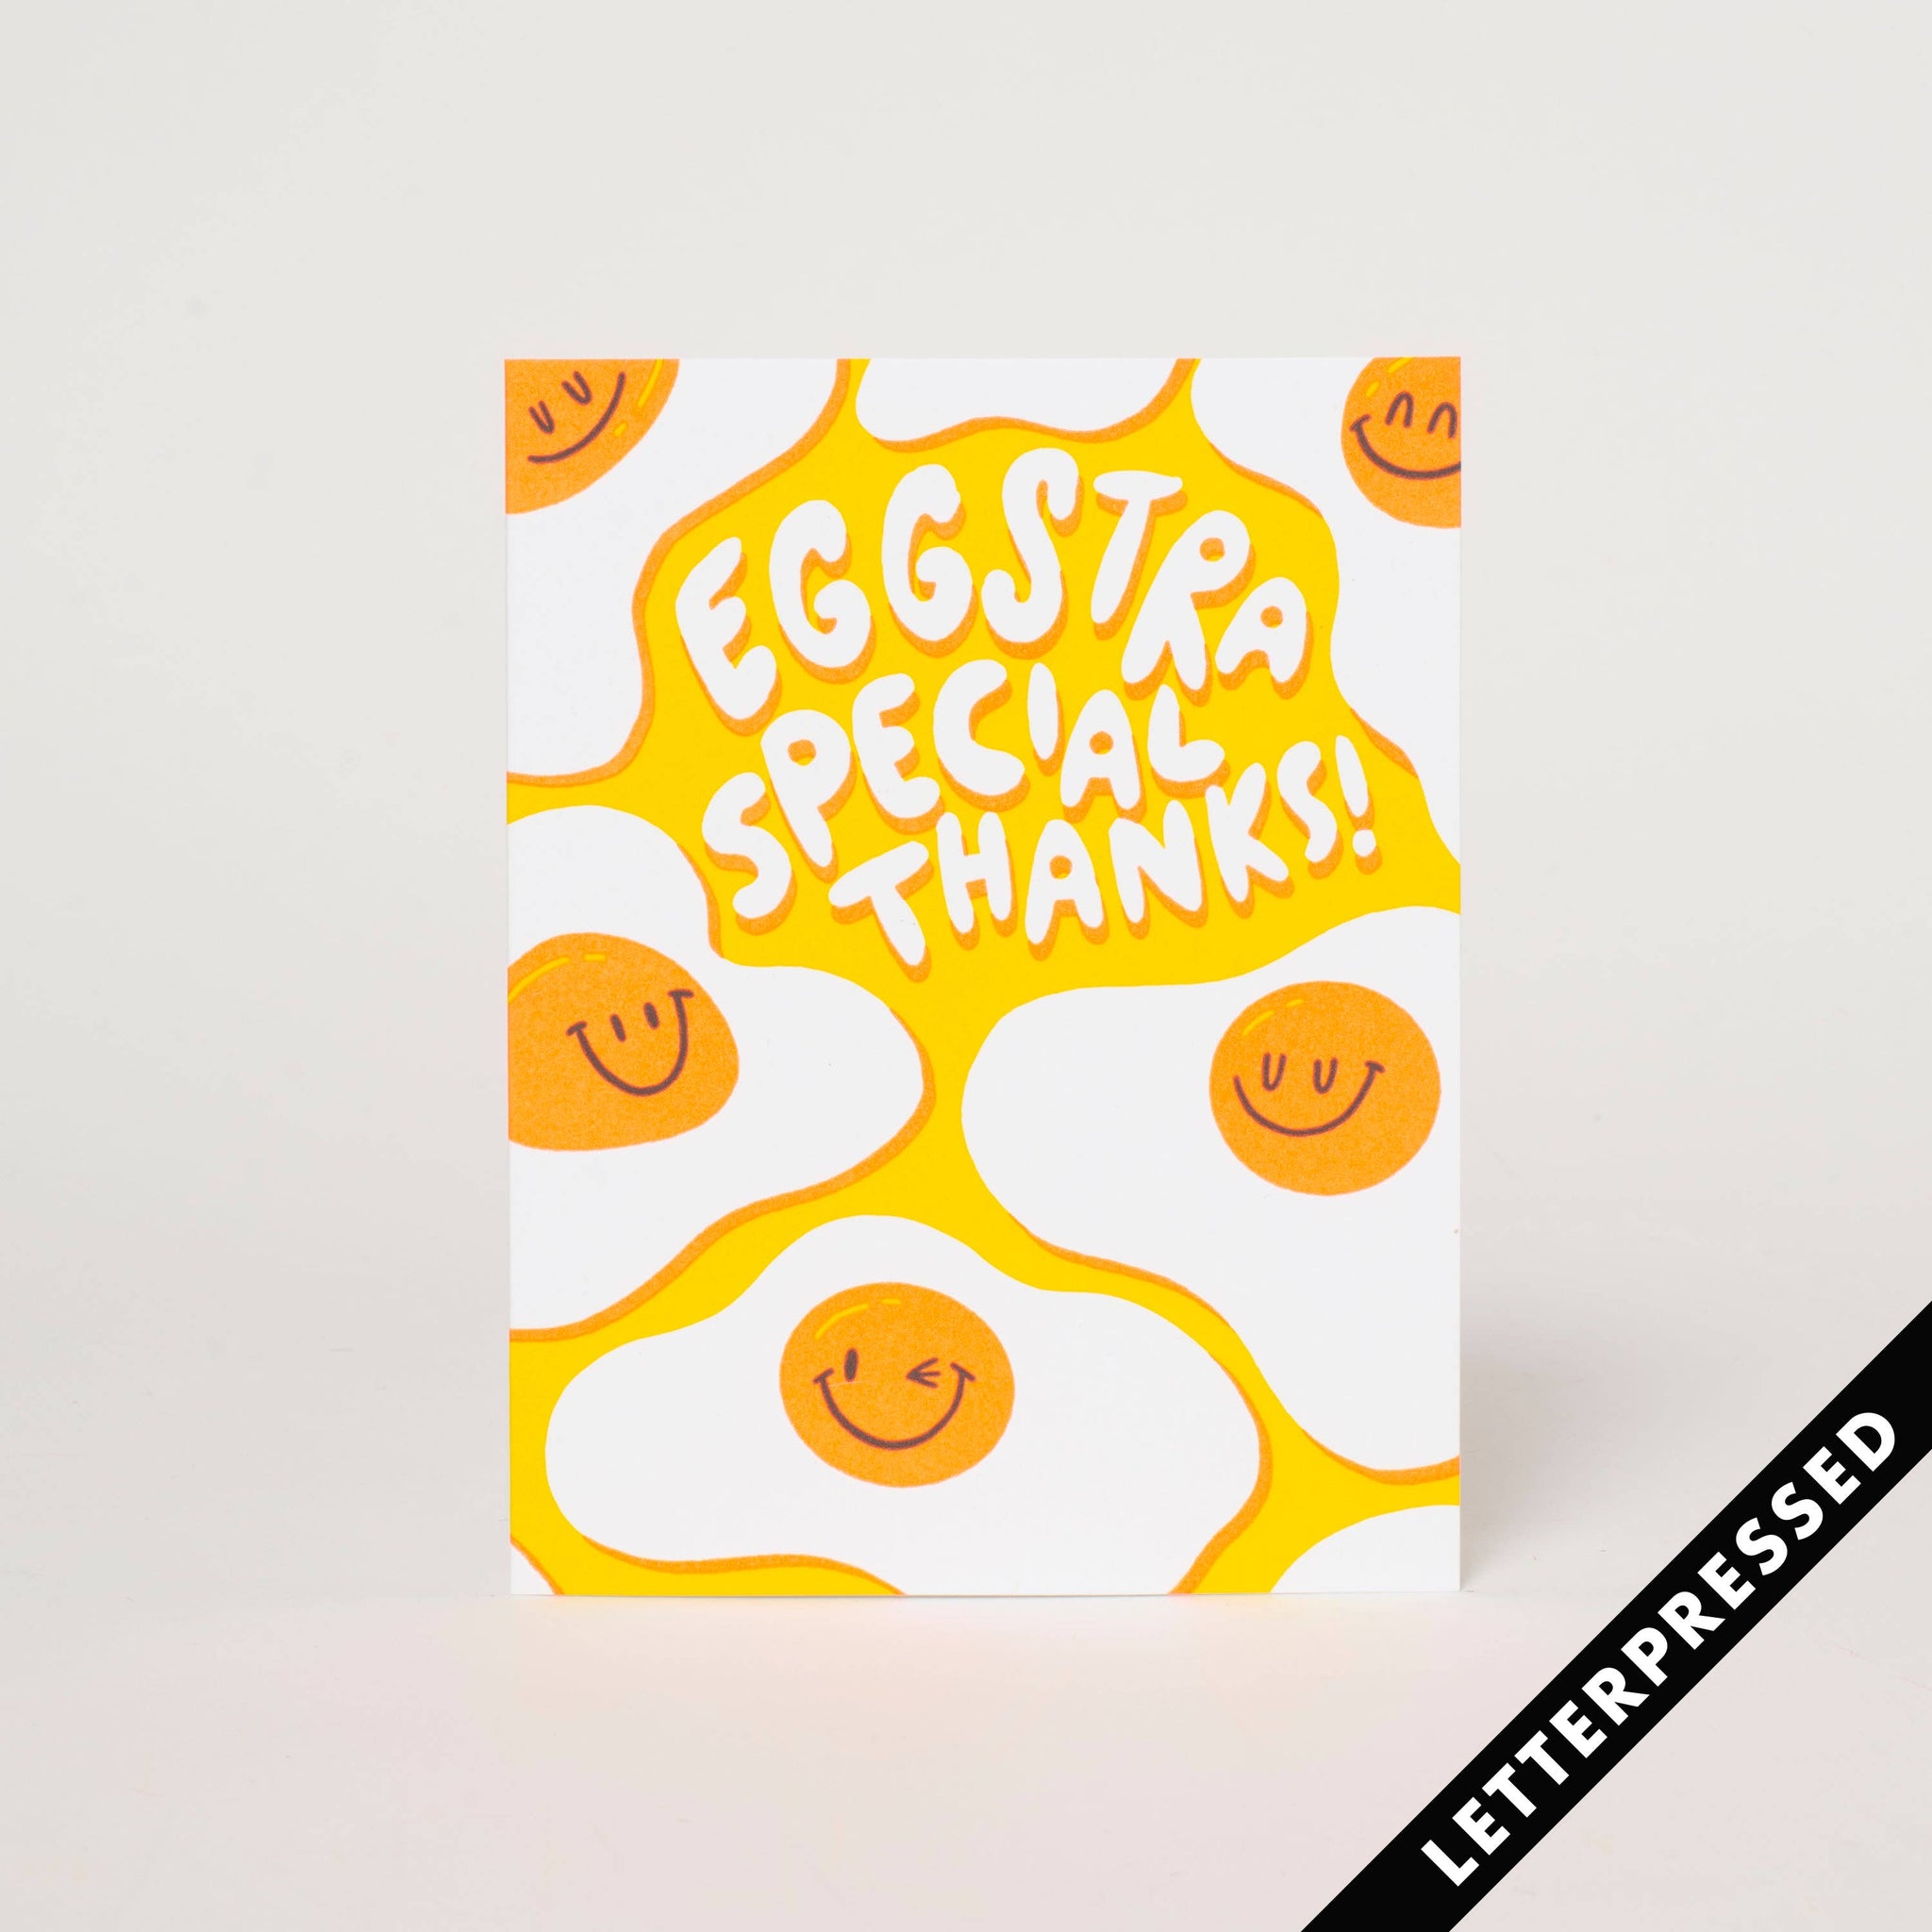 Eggstra Special Thanks!